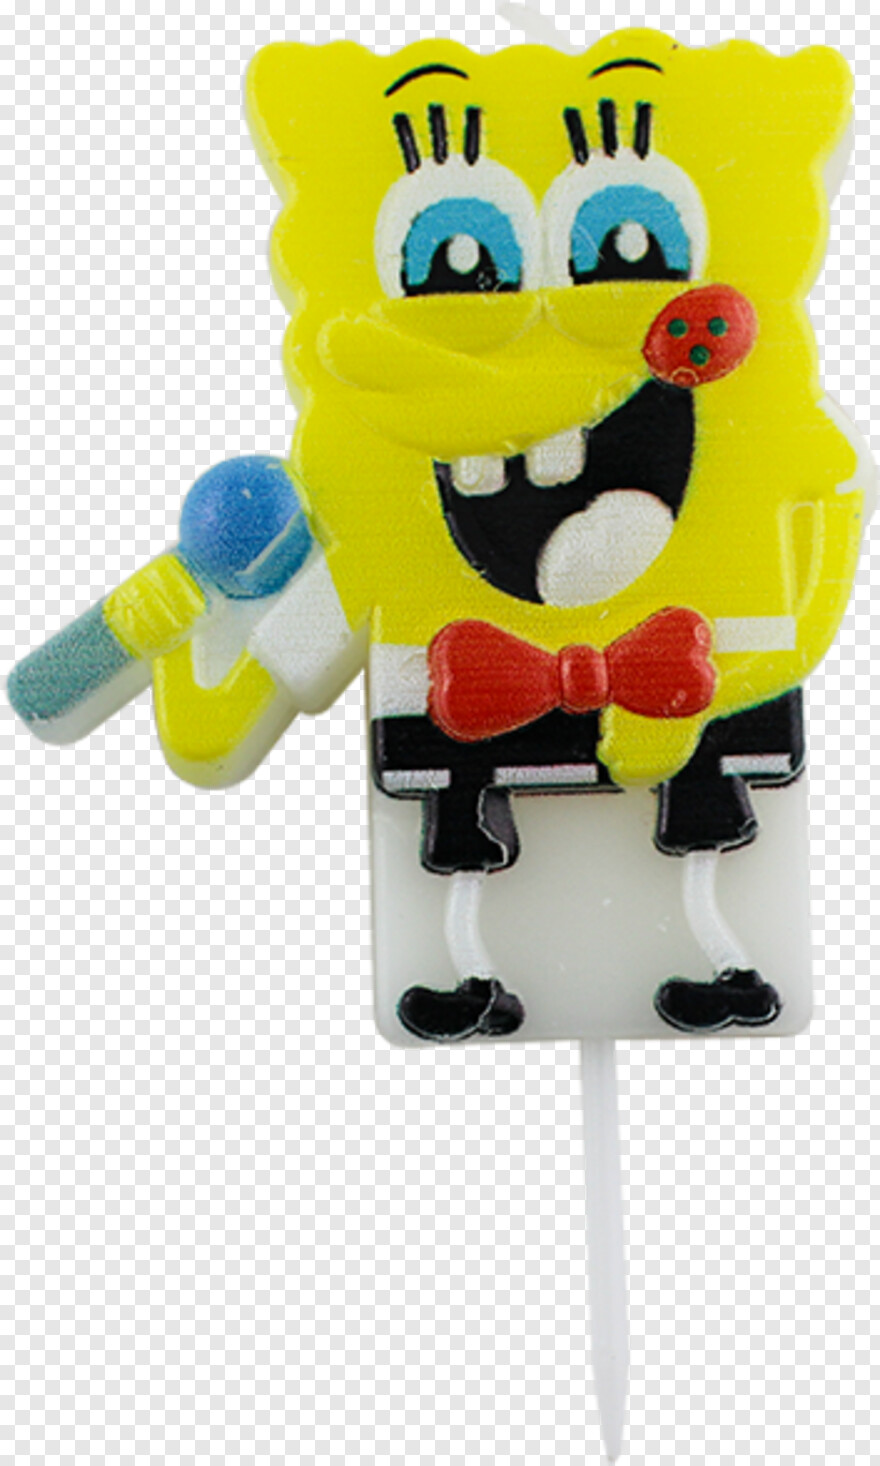 spongebob-squarepants # 358315